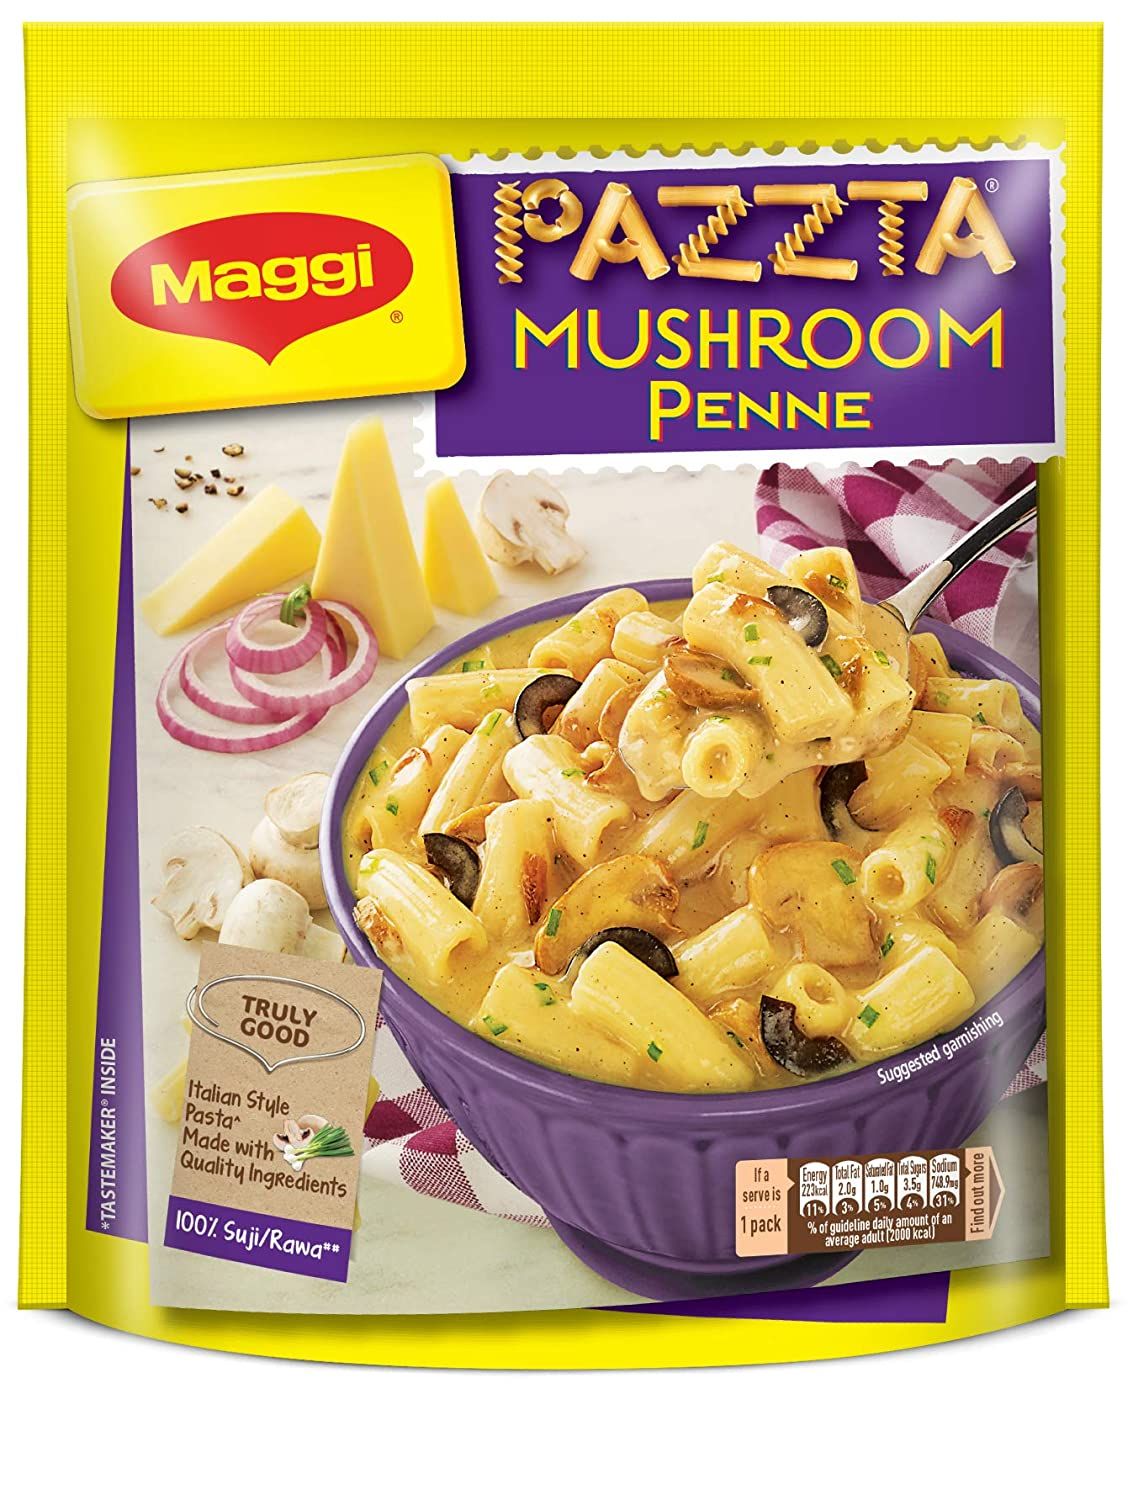 Maggi Pazzta Instant Pasta Mushroom Penne Image